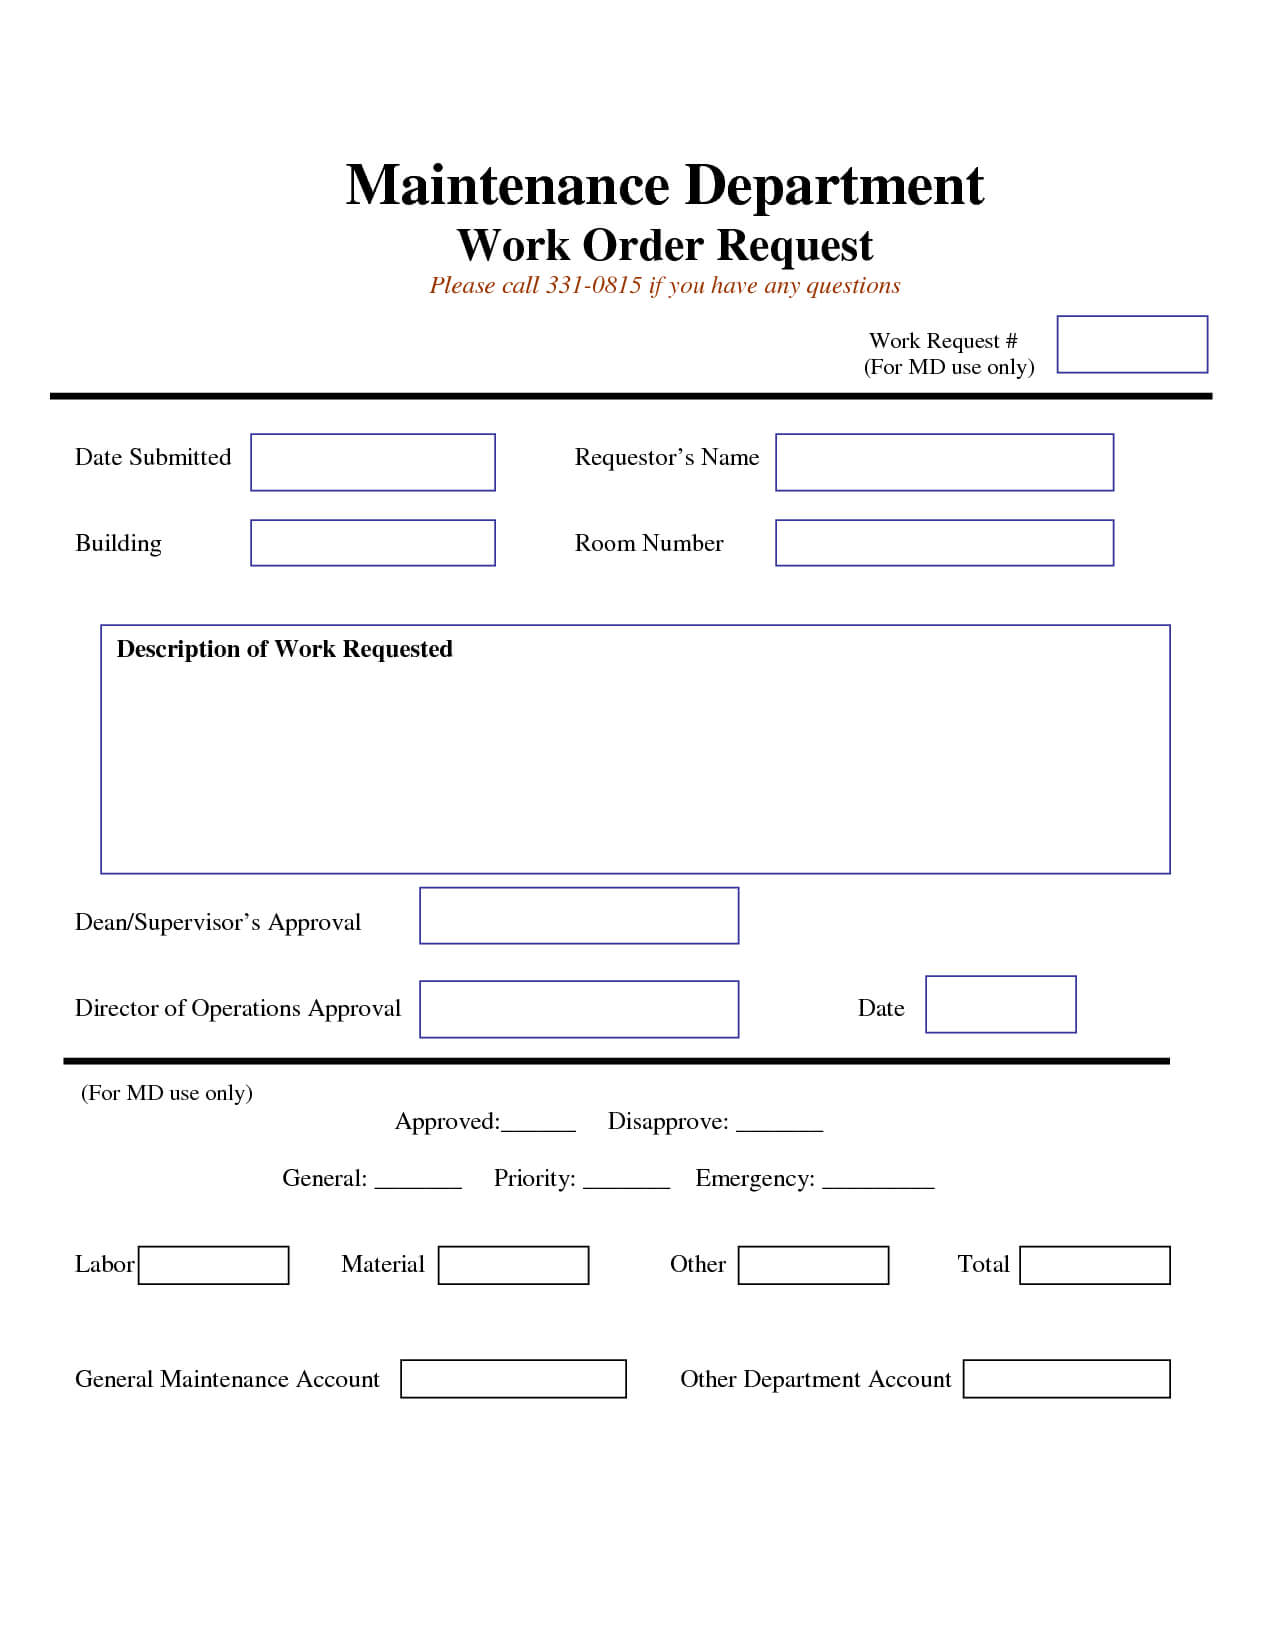 Work Request Form | Maintenance Work Order Request Form Regarding Maintenance Job Card Template